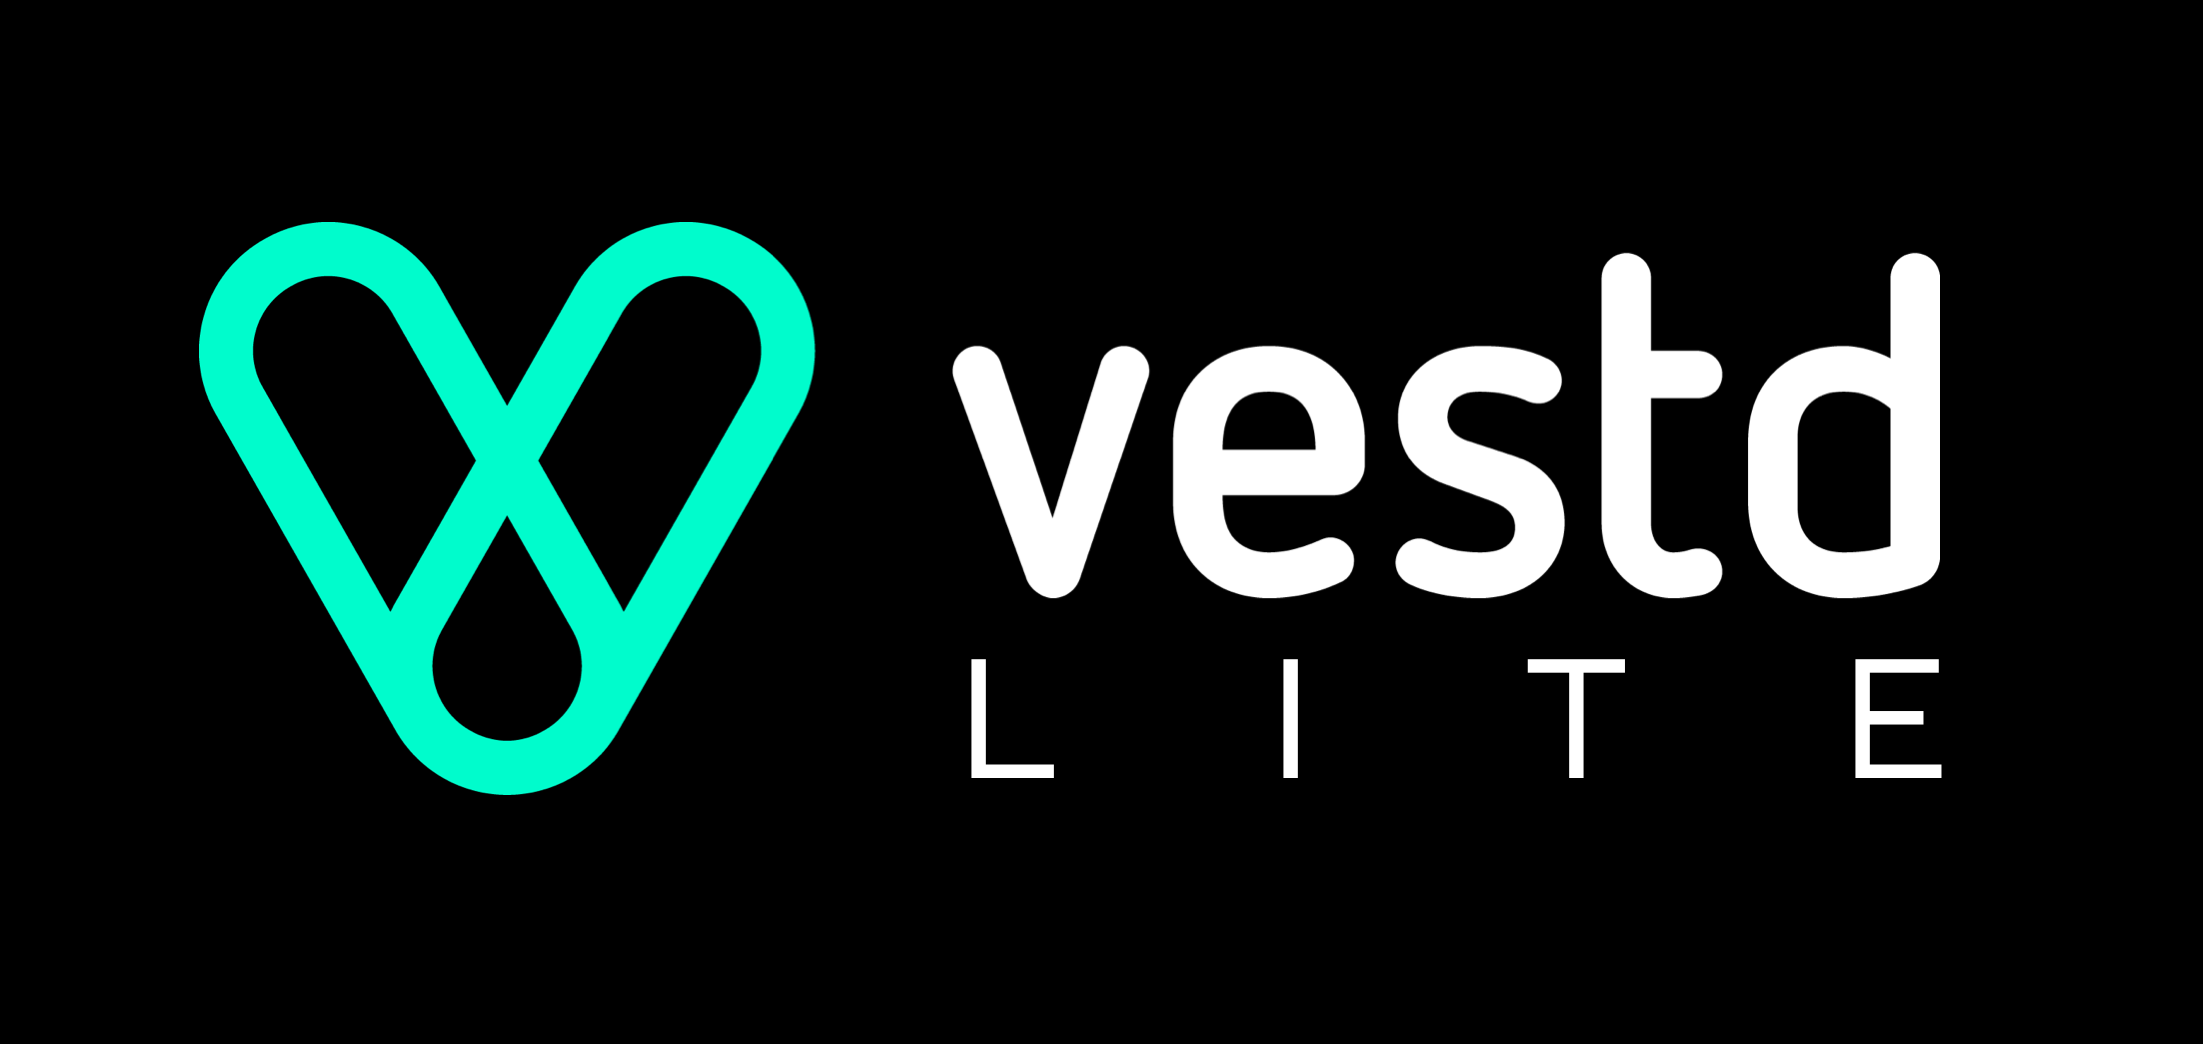 Vestd Lite logo - white on black